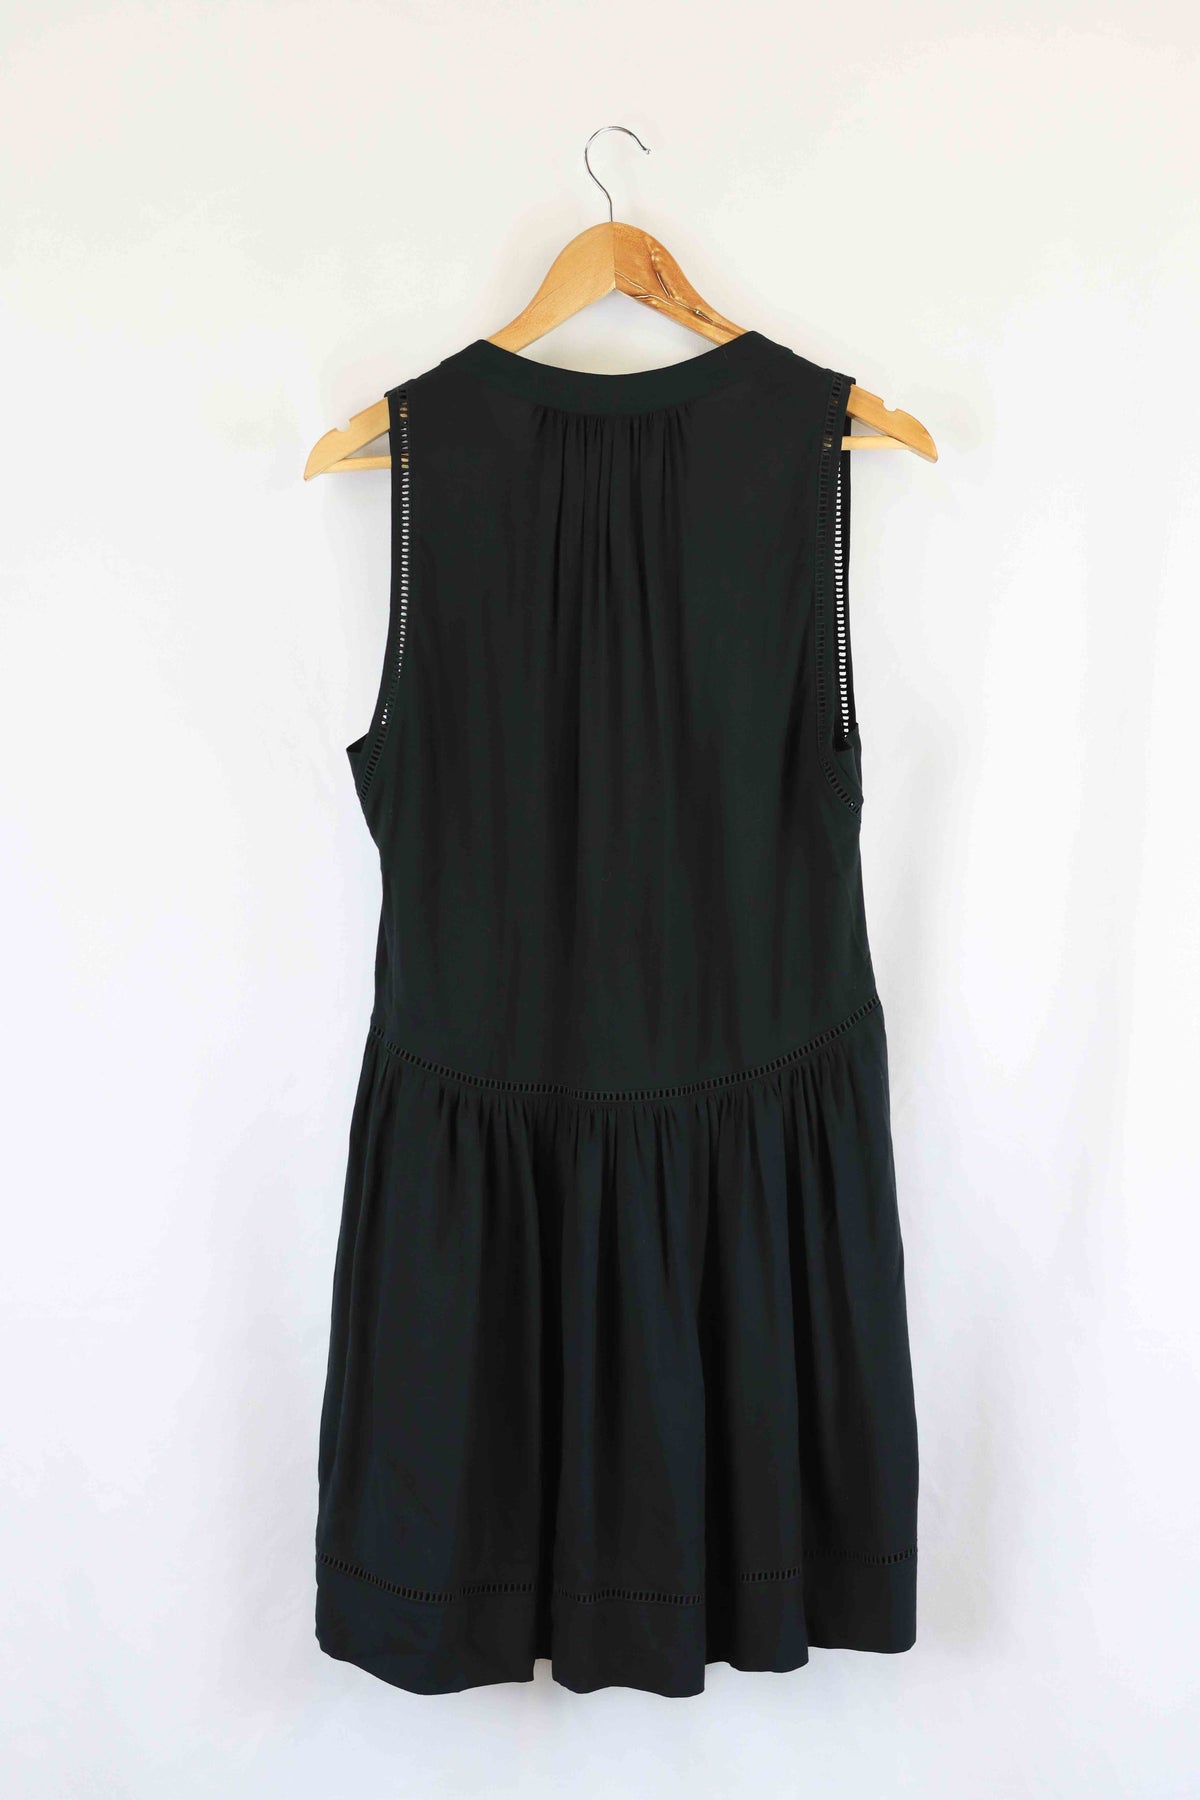 Seafolly Black Dress M